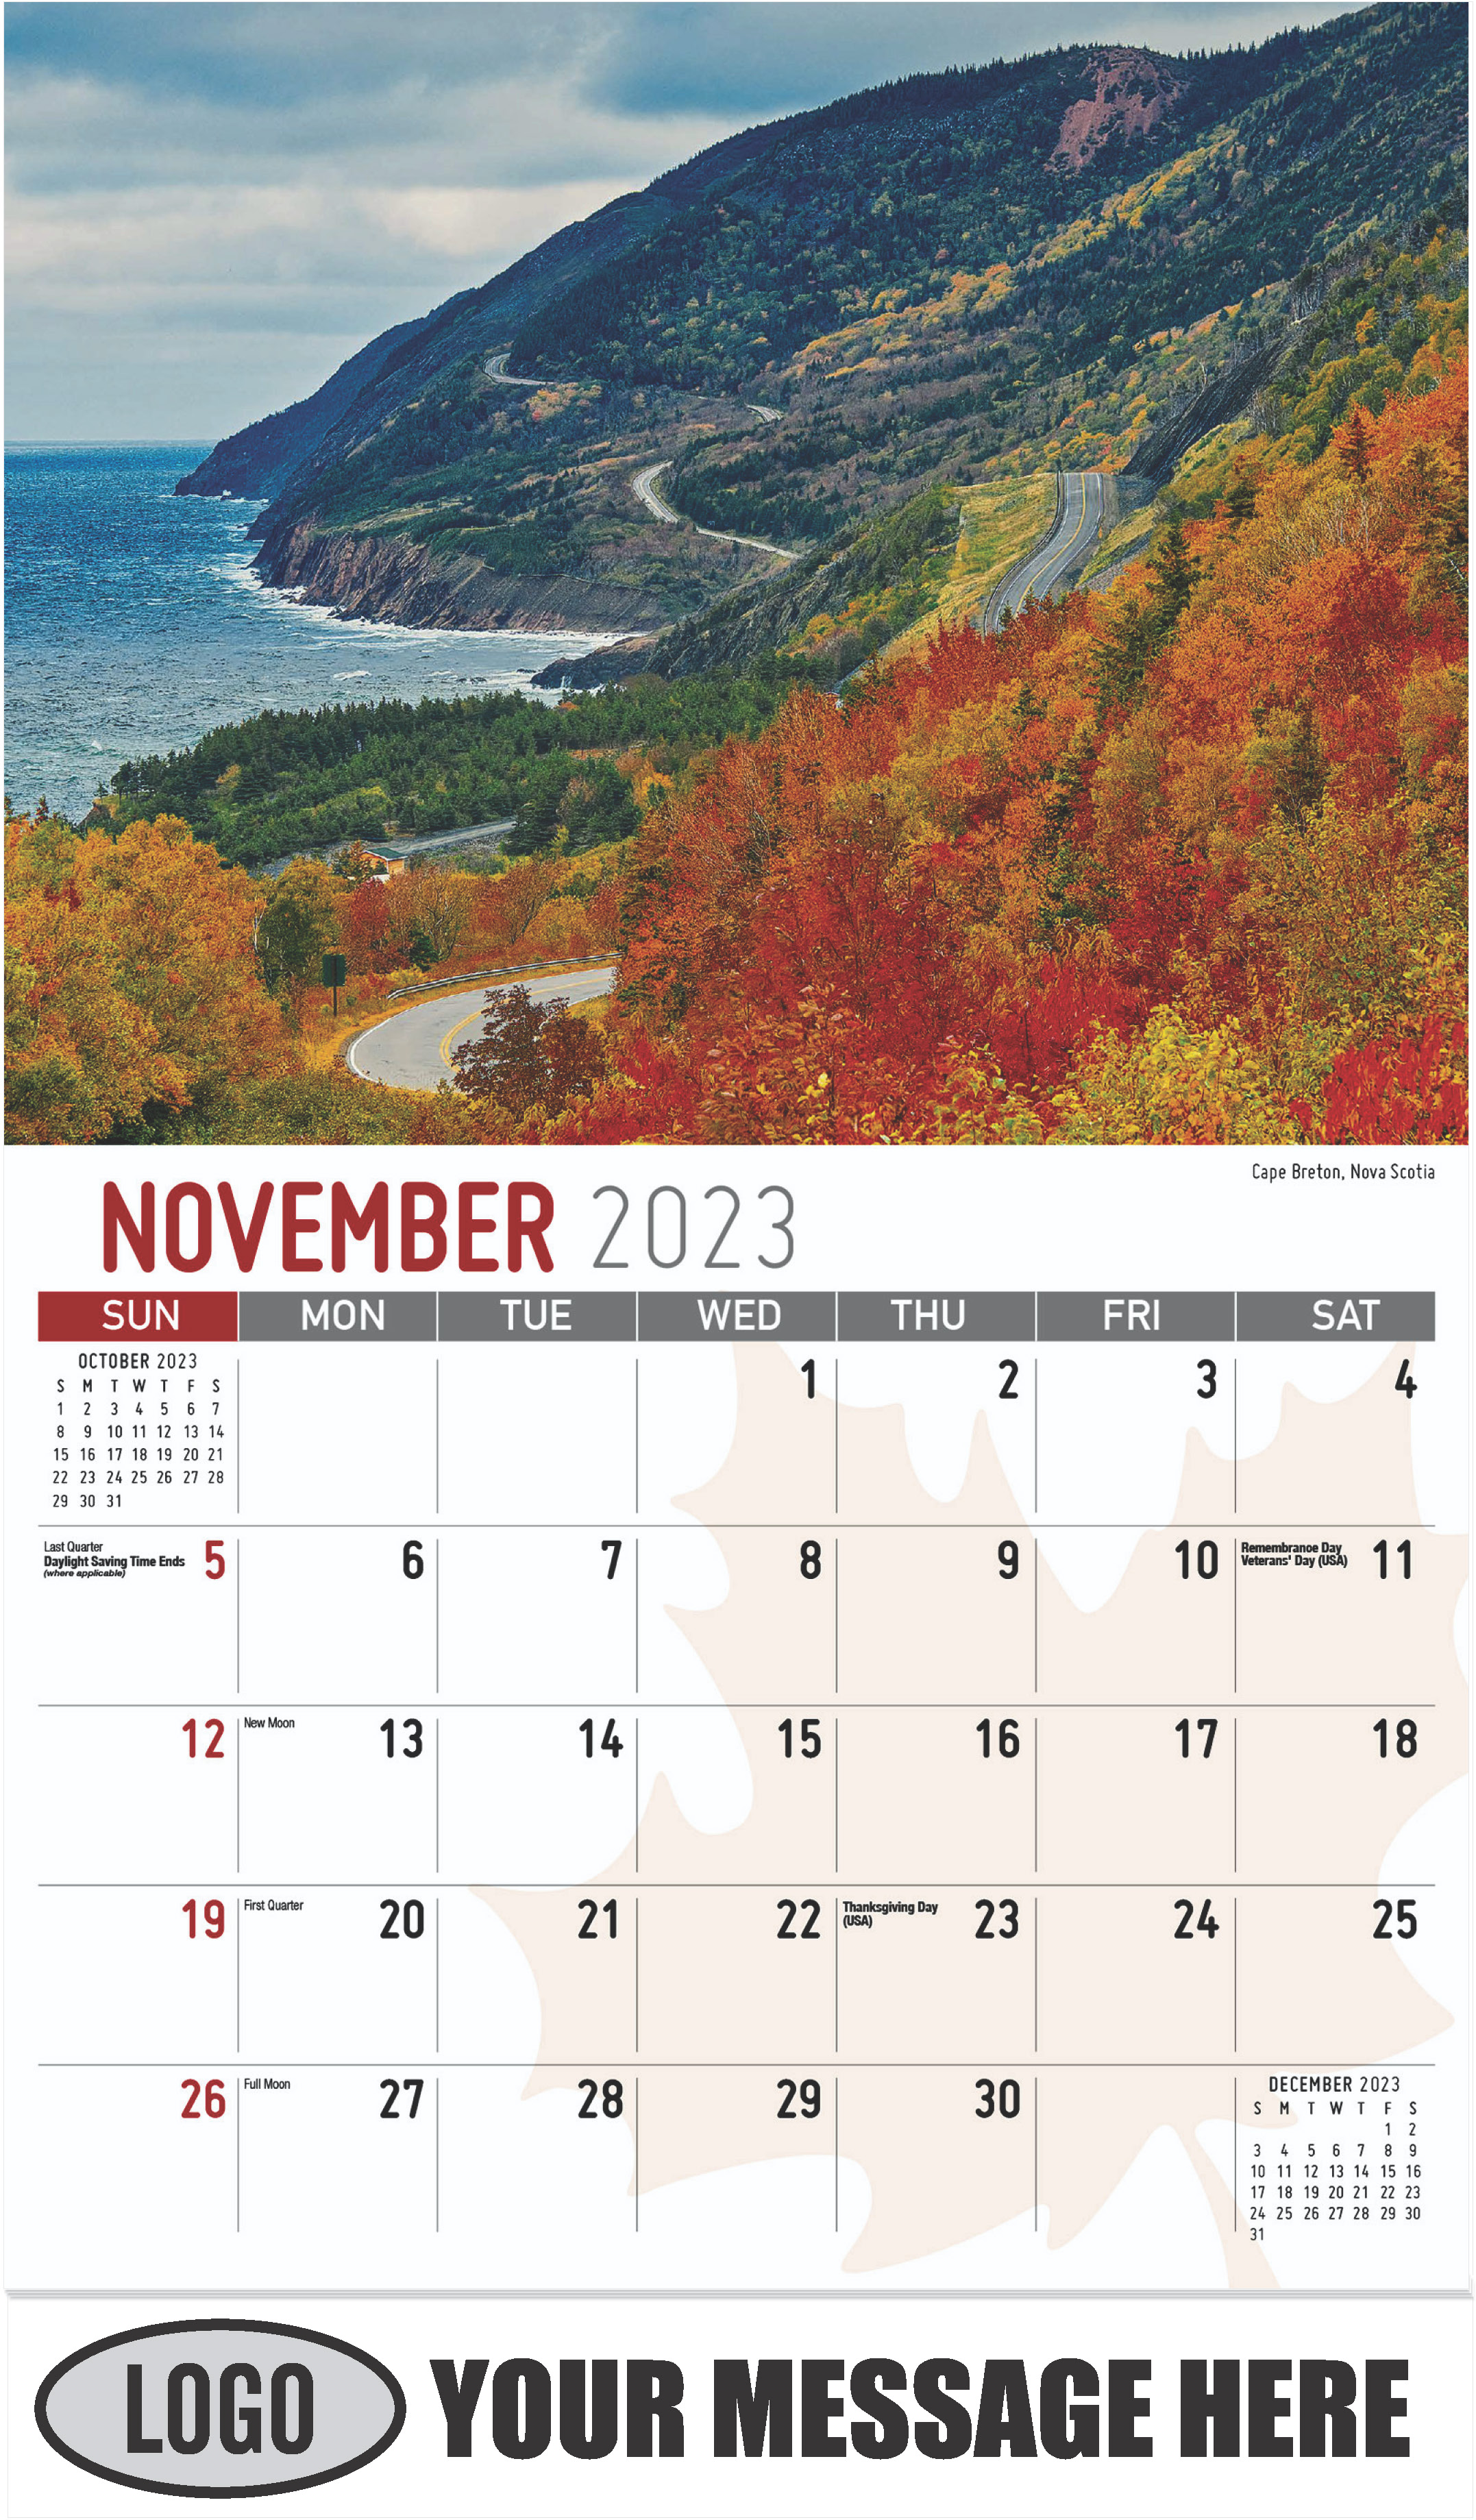 Cape Breton, Nova Scotia - November - Scenes of Canada 2023 Promotional Calendar